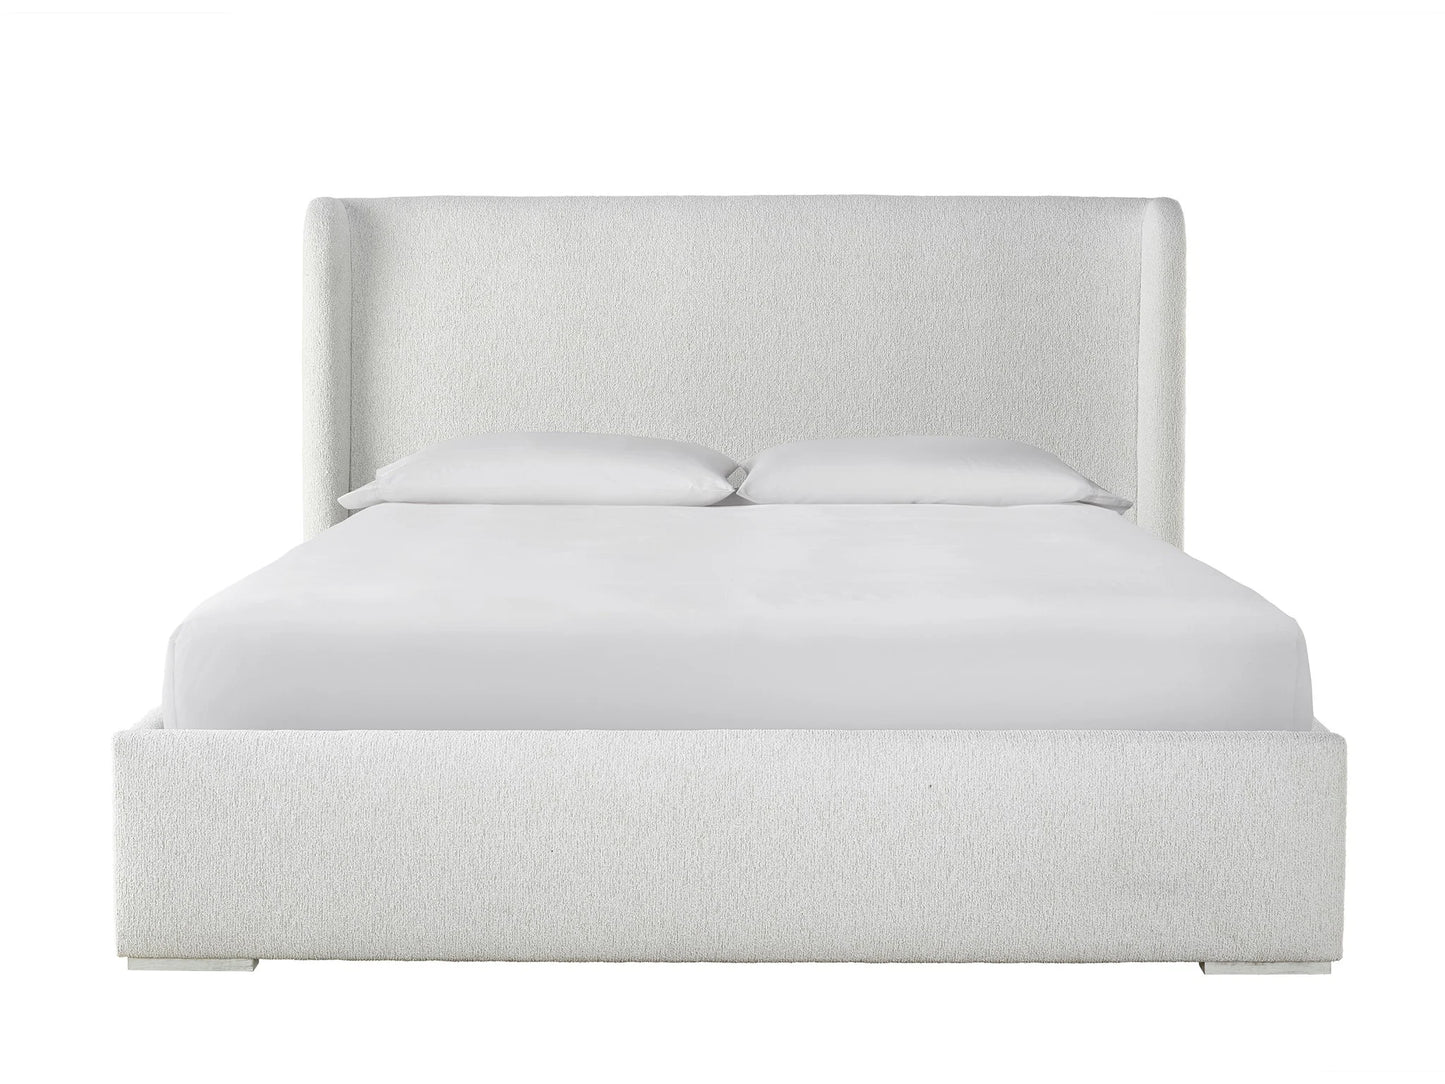 Restore Upholstered King Bed